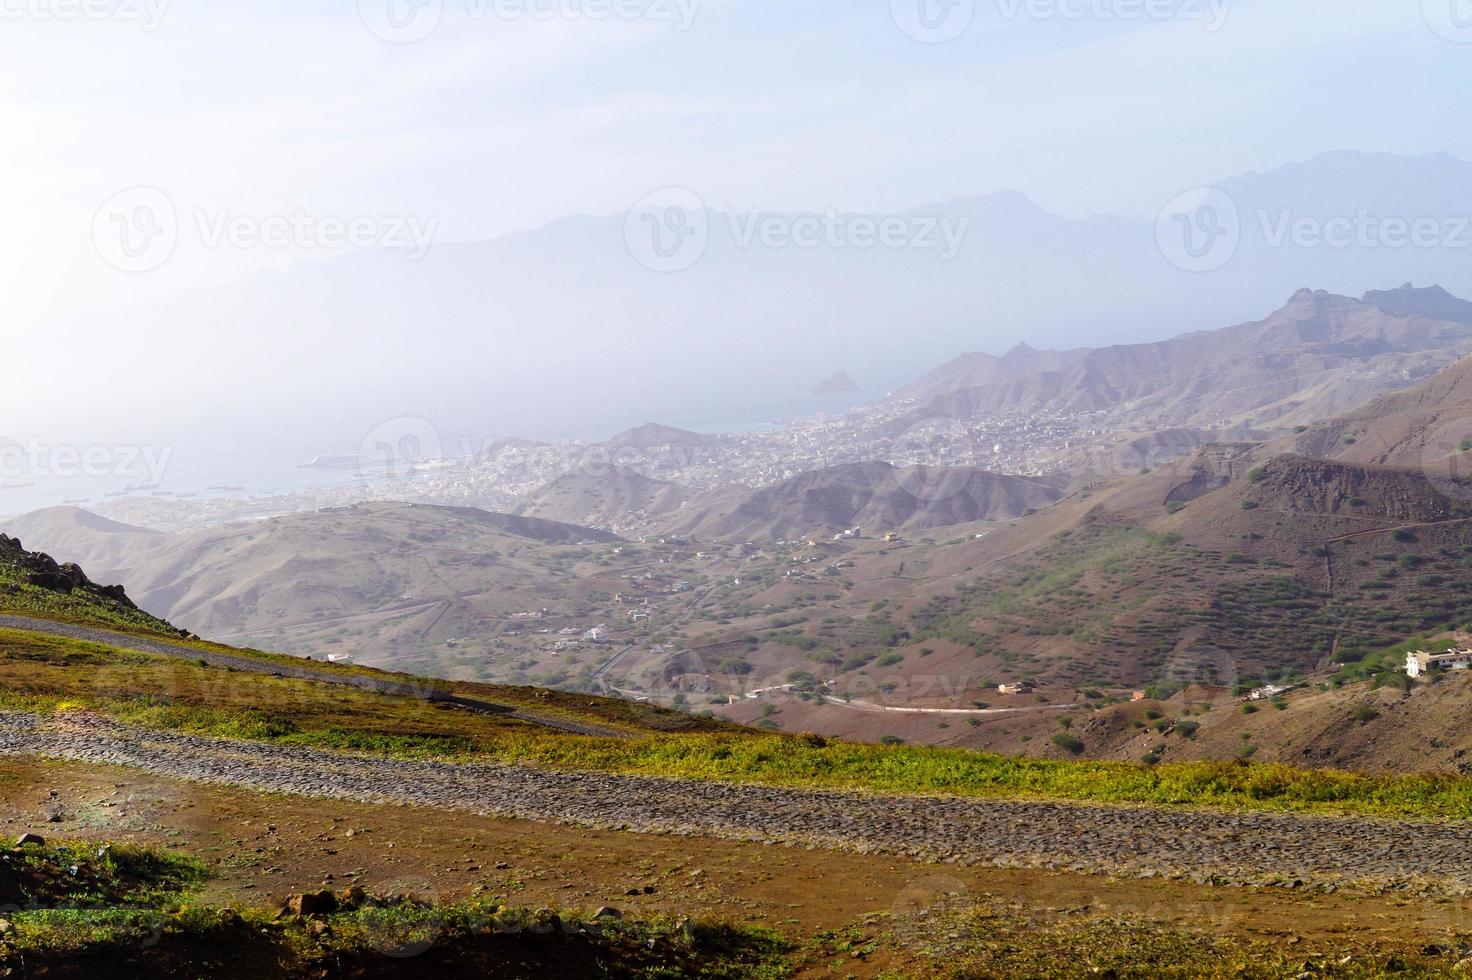 Mindelo - Sao Vicente - Cape Verde Island photo